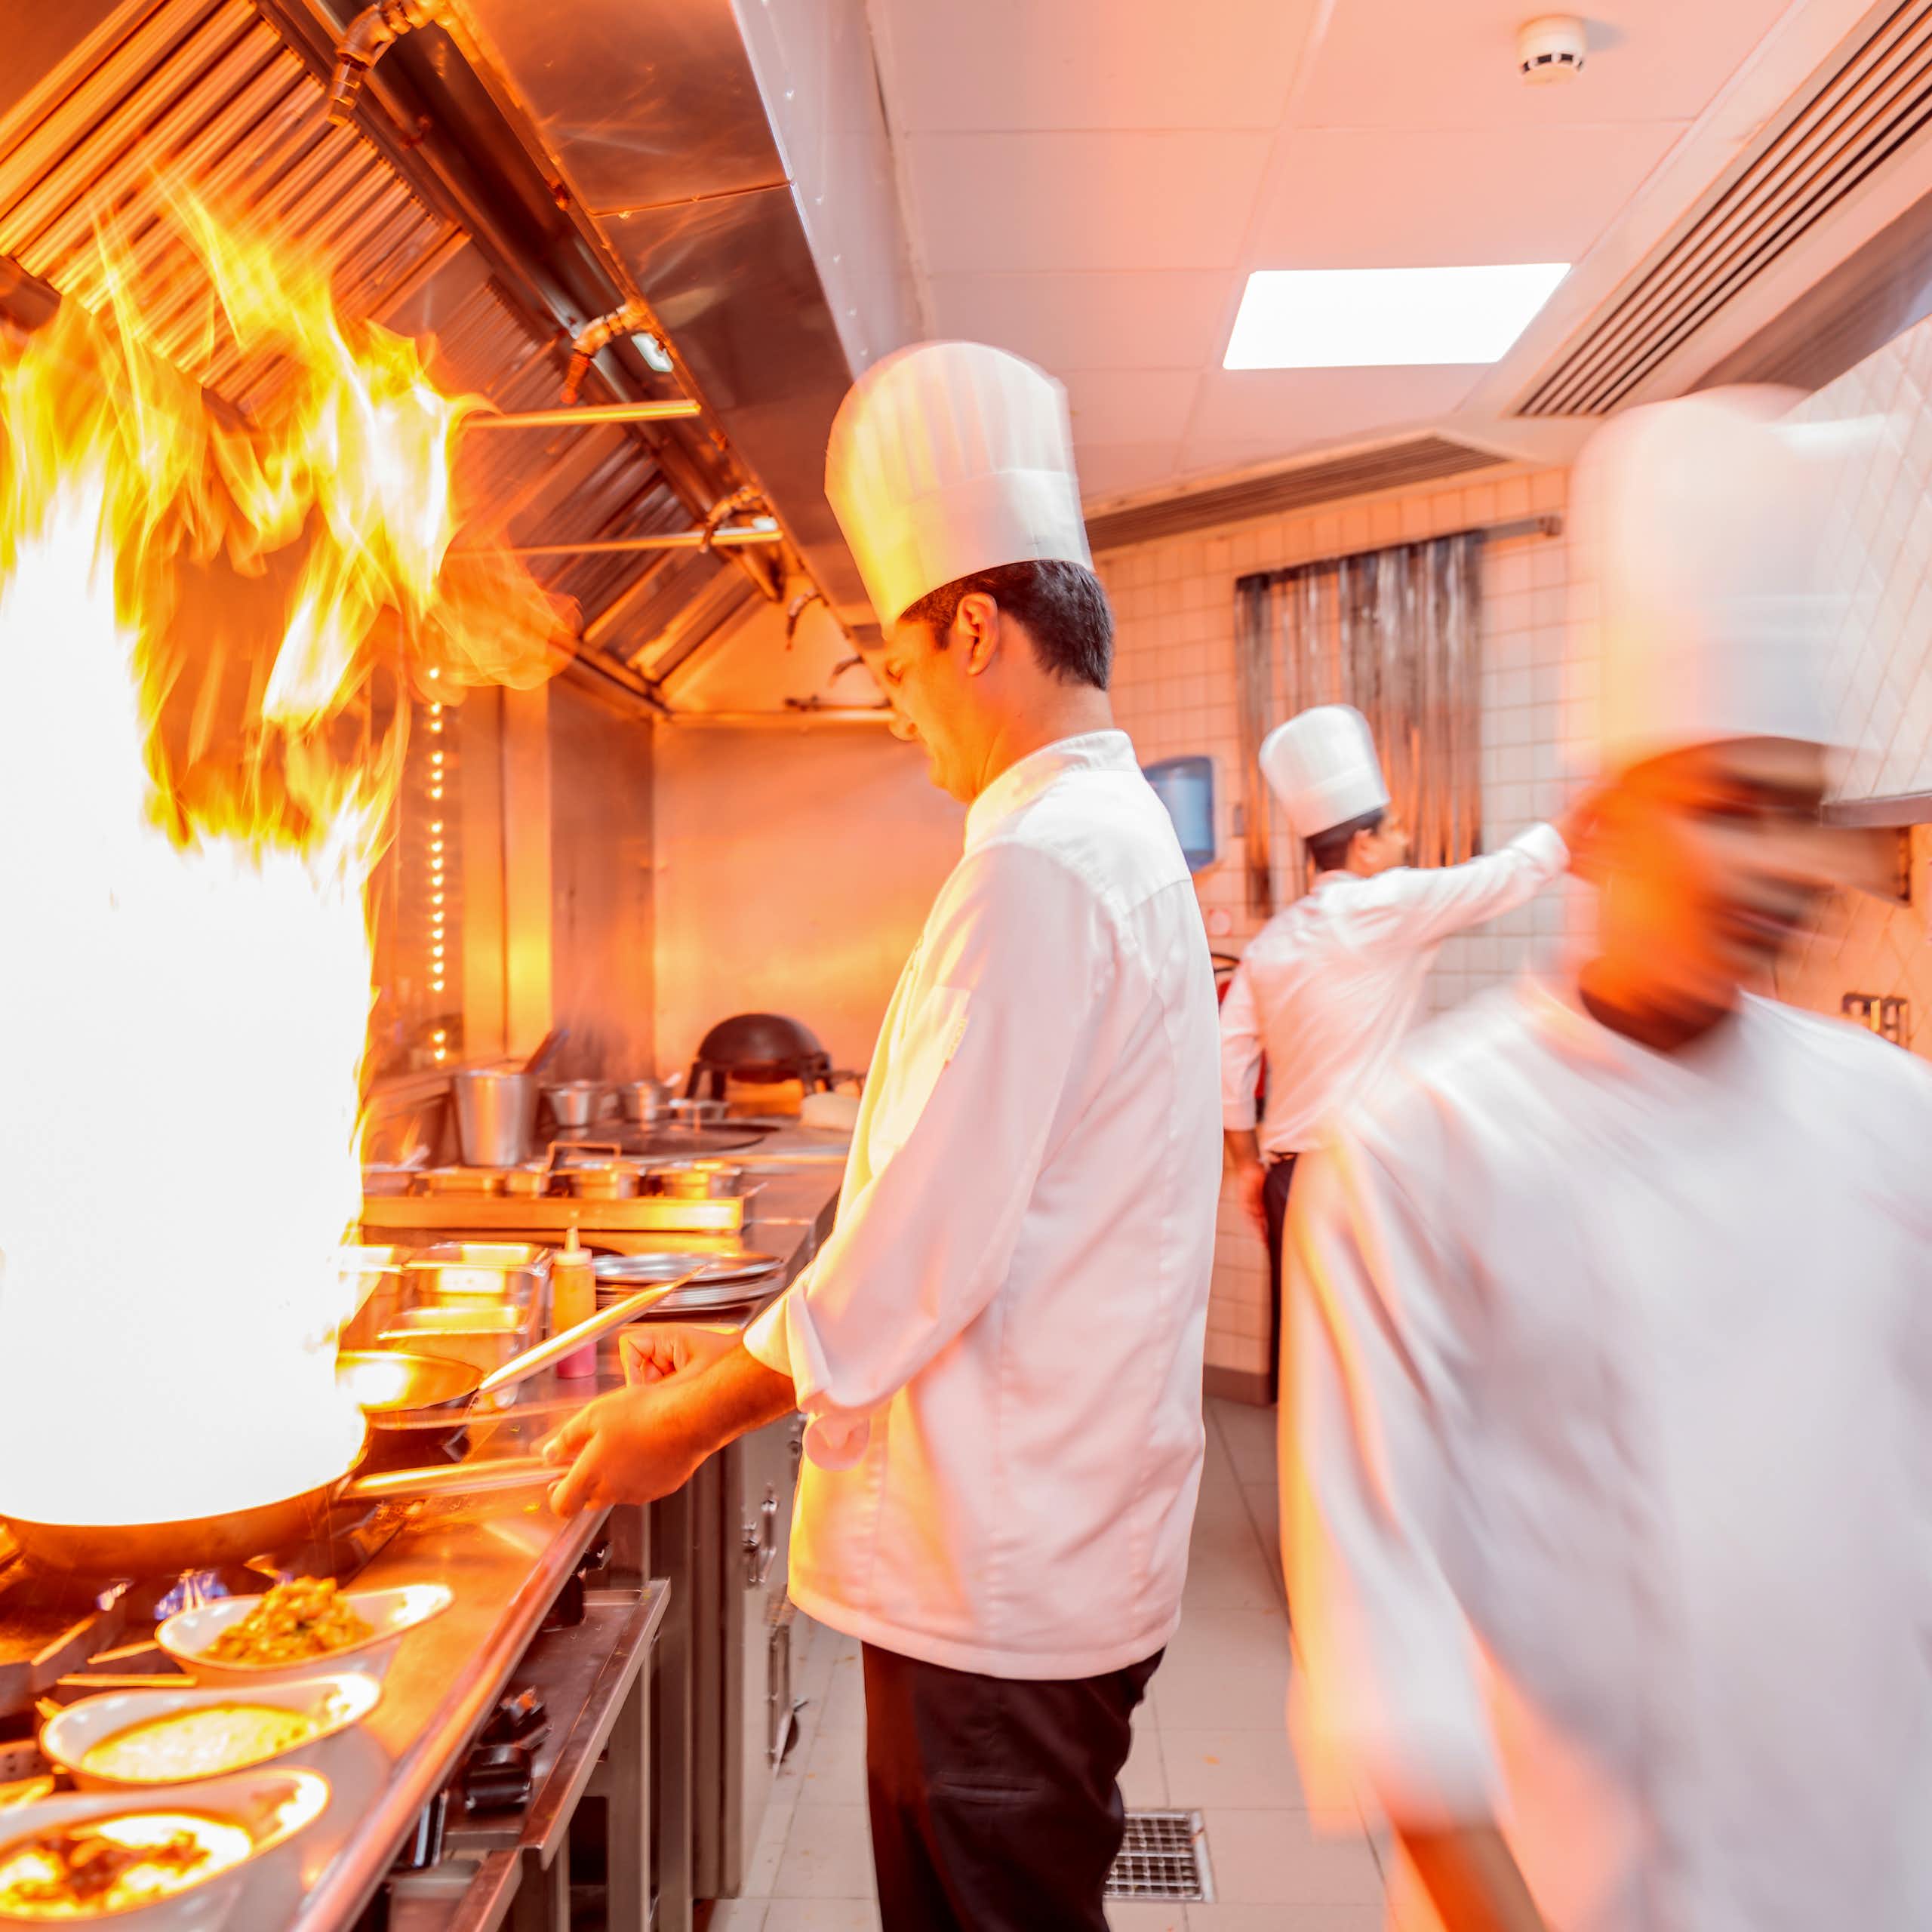 chefs in restaurant kitchen cooking wih flames